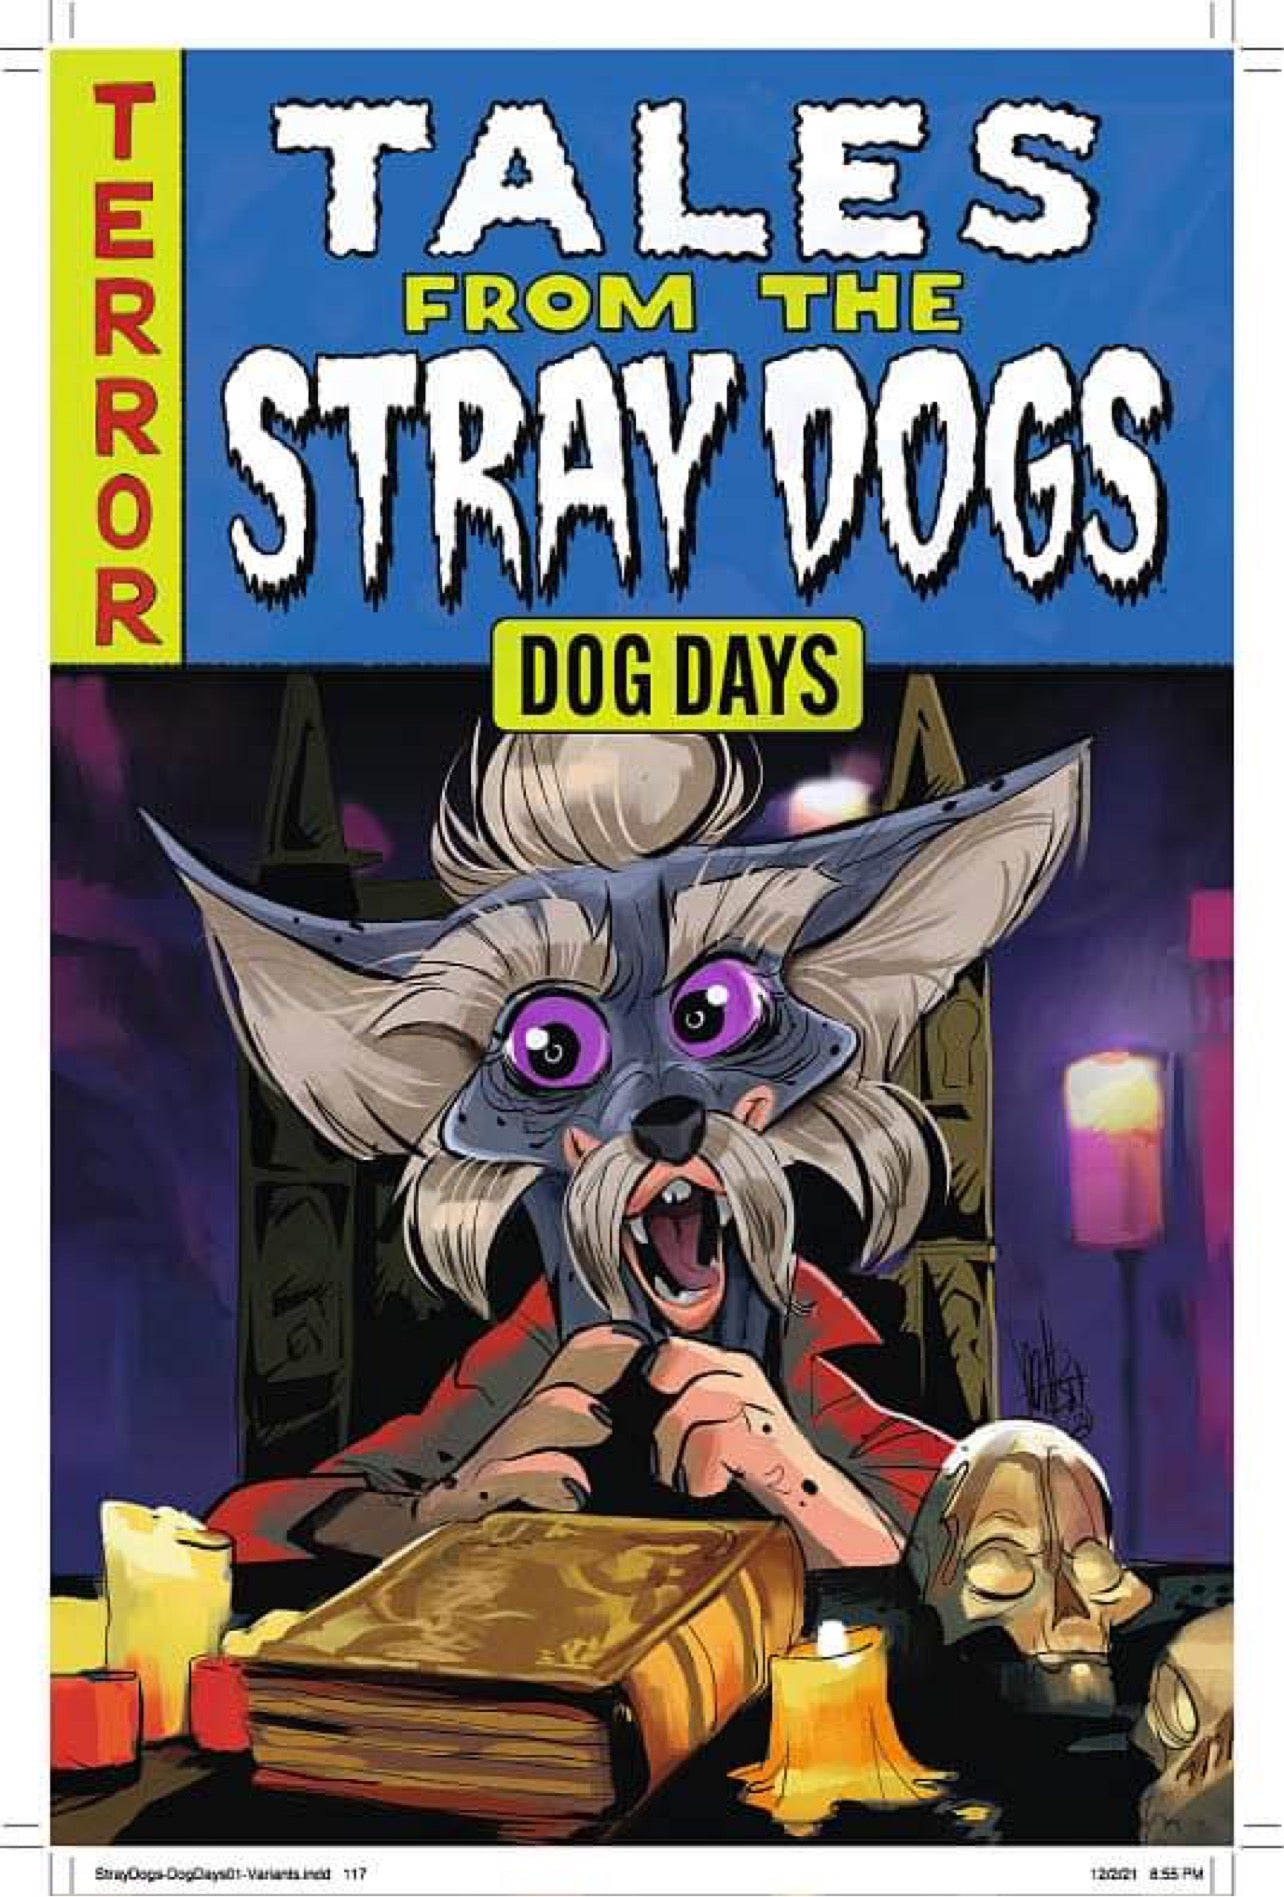 STRAY DOGS DOG DAYS #1 MEL MILTON EXCLUSIVE VARIANT CGC 9.8